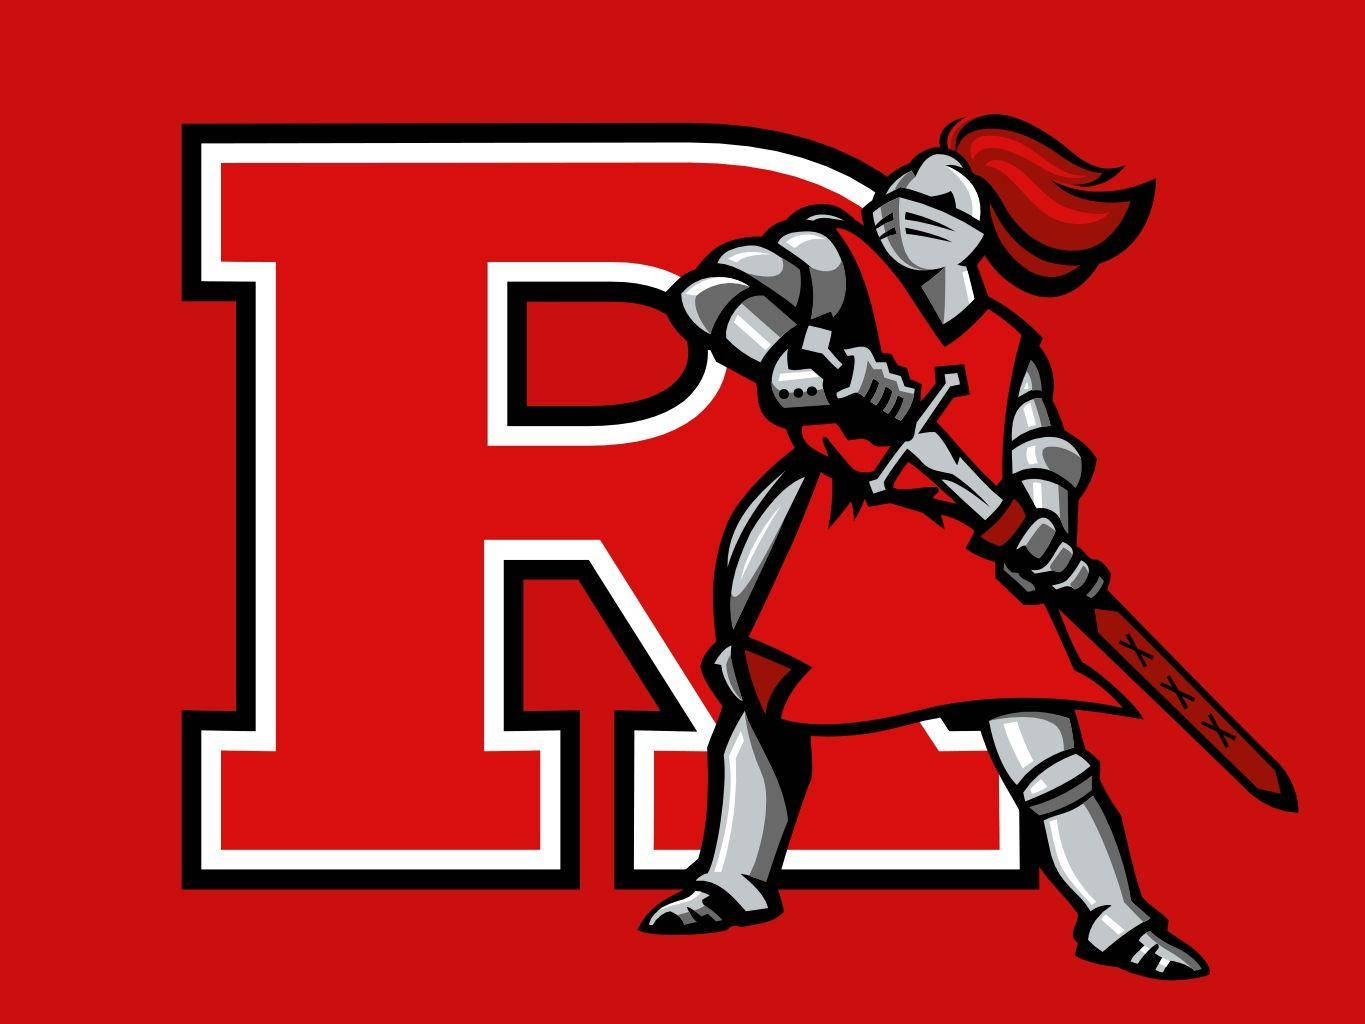 Logode Los Caballeros De Rutgers Detallado Fondo de pantalla